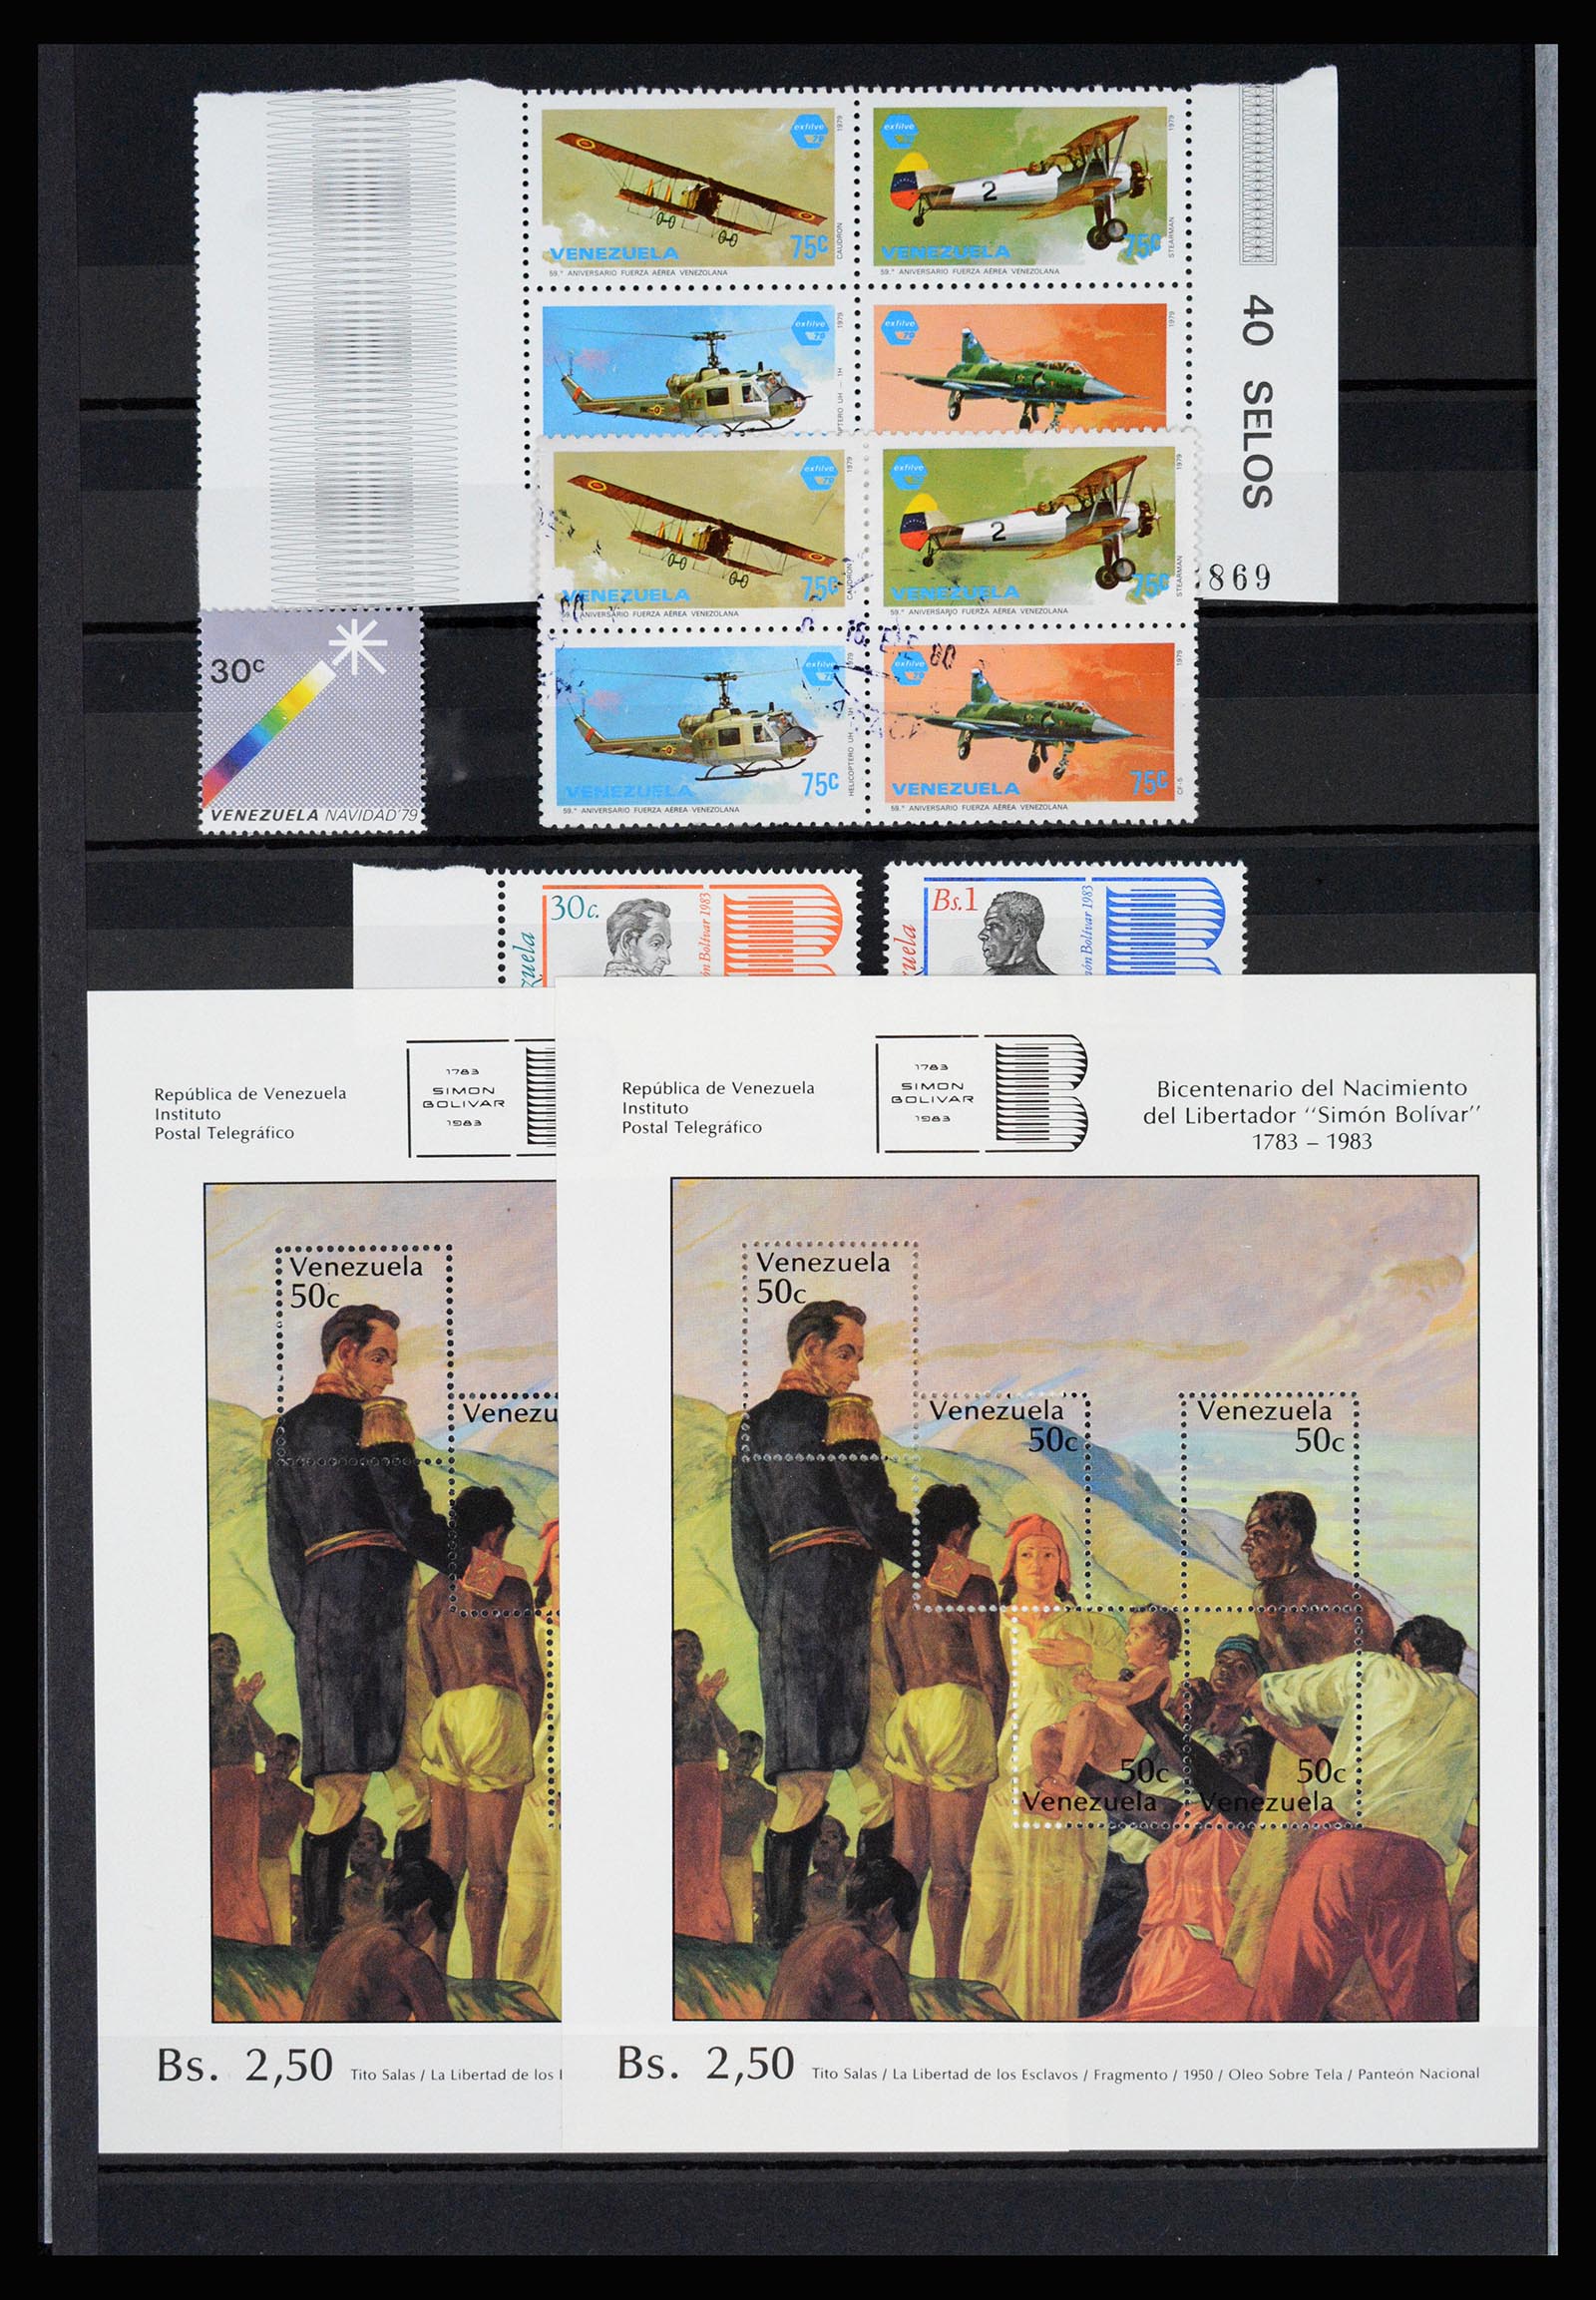 36987 077 - Stamp collection 36987 Venezuela 1860-1995.